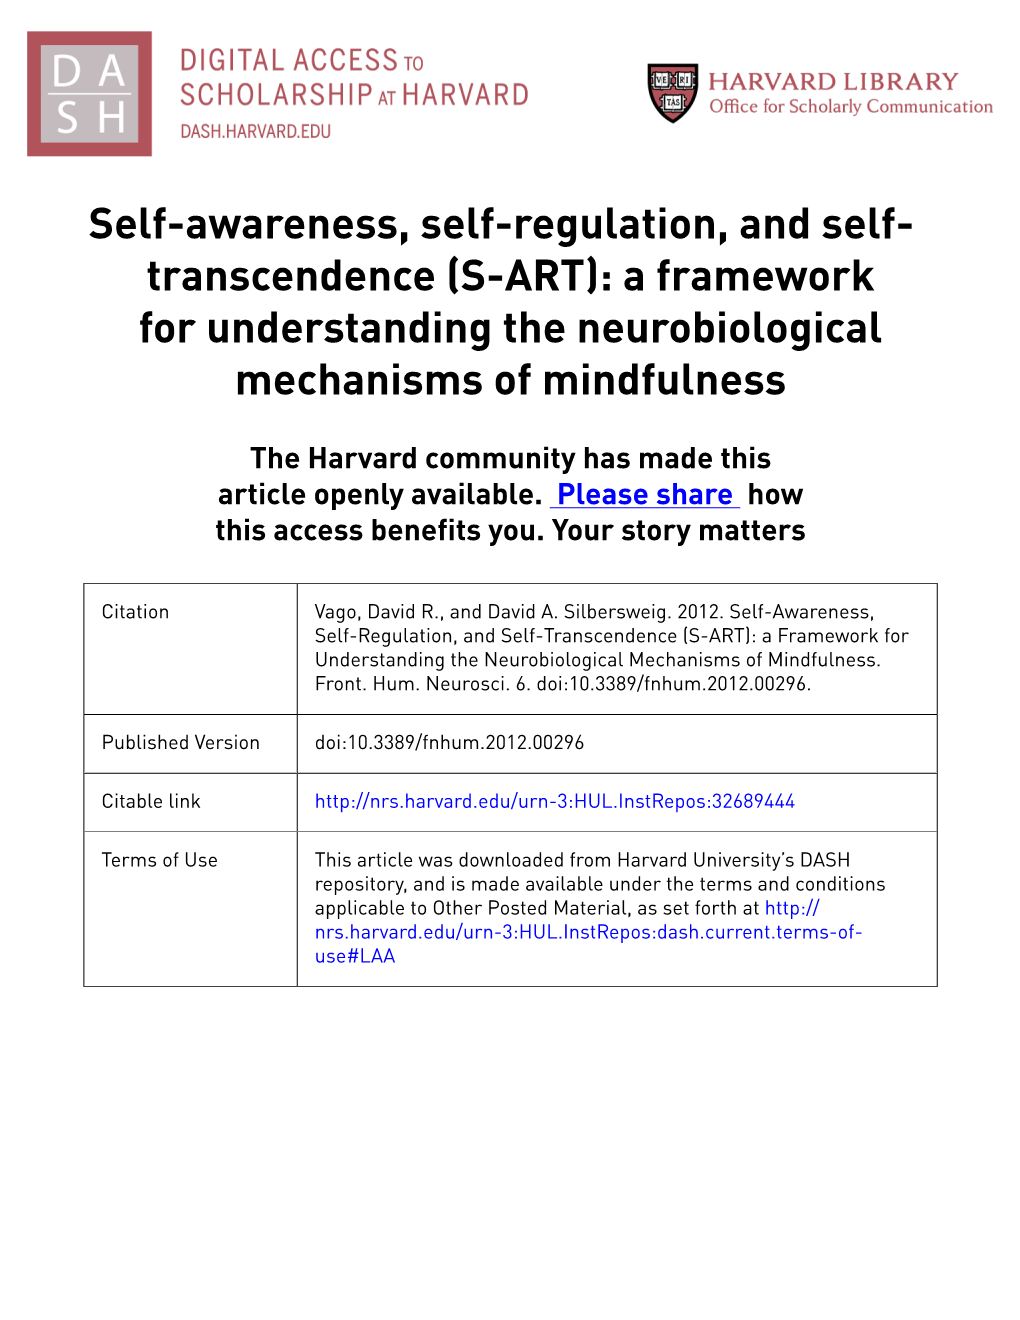 Self-Awareness, Self-Regulation, and Self-Transcendence (S-ART): a Framework for Understanding the Neurobiological Mechanisms of Mindfulness